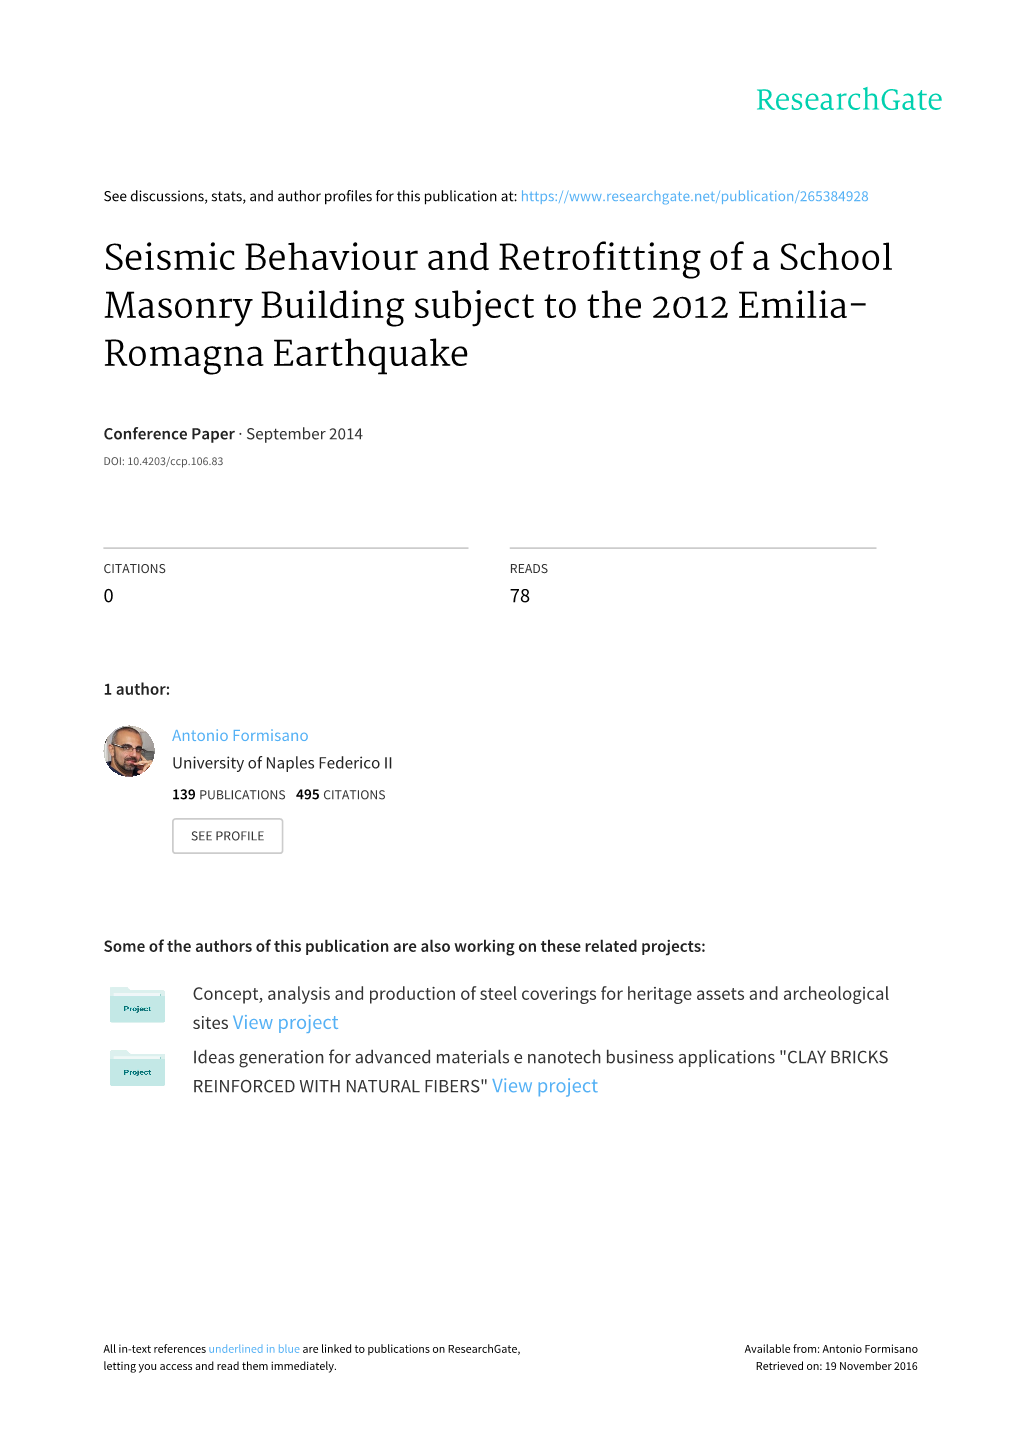 Seismic Behaviour and Retrofitting of a School Masonry Building Subject to the 2012 Emilia- Romagna Earthquake